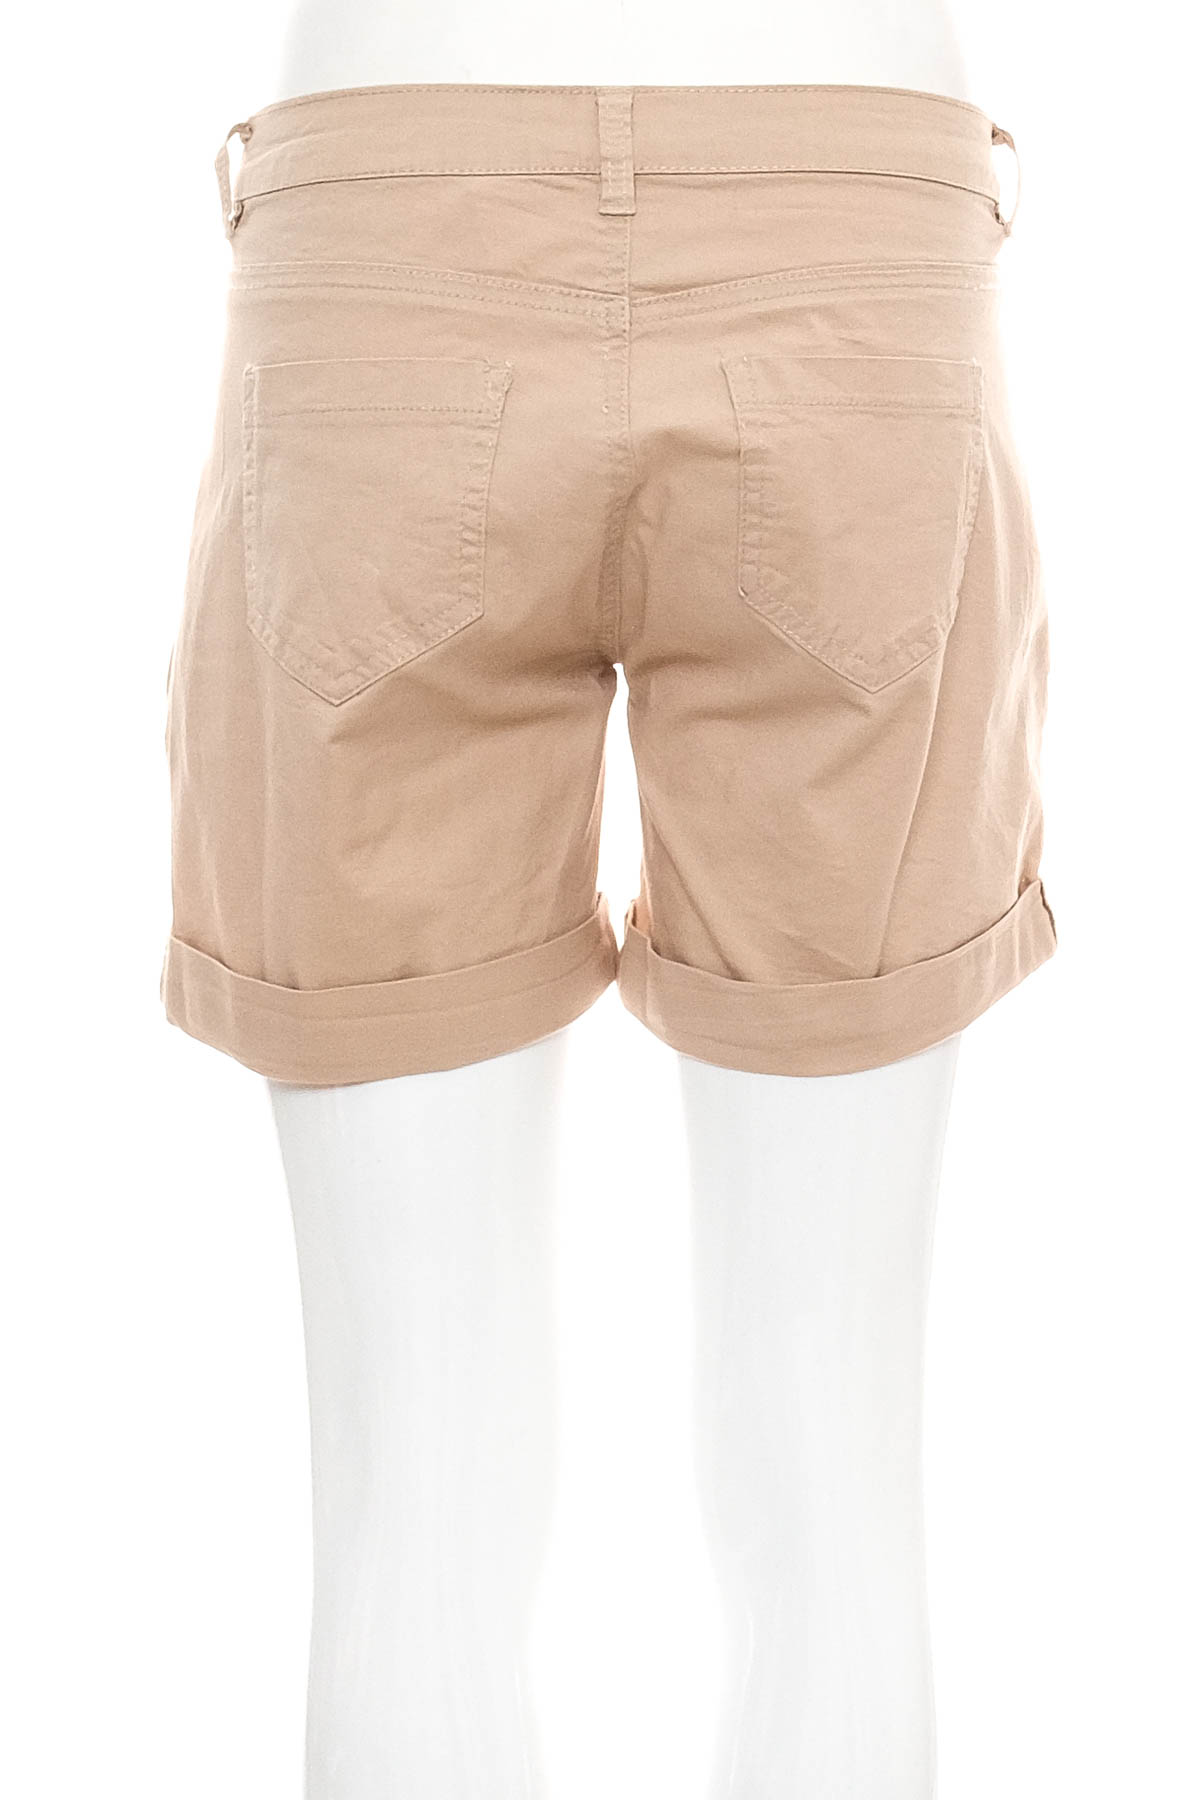 Female shorts - Zalando essentials - 1